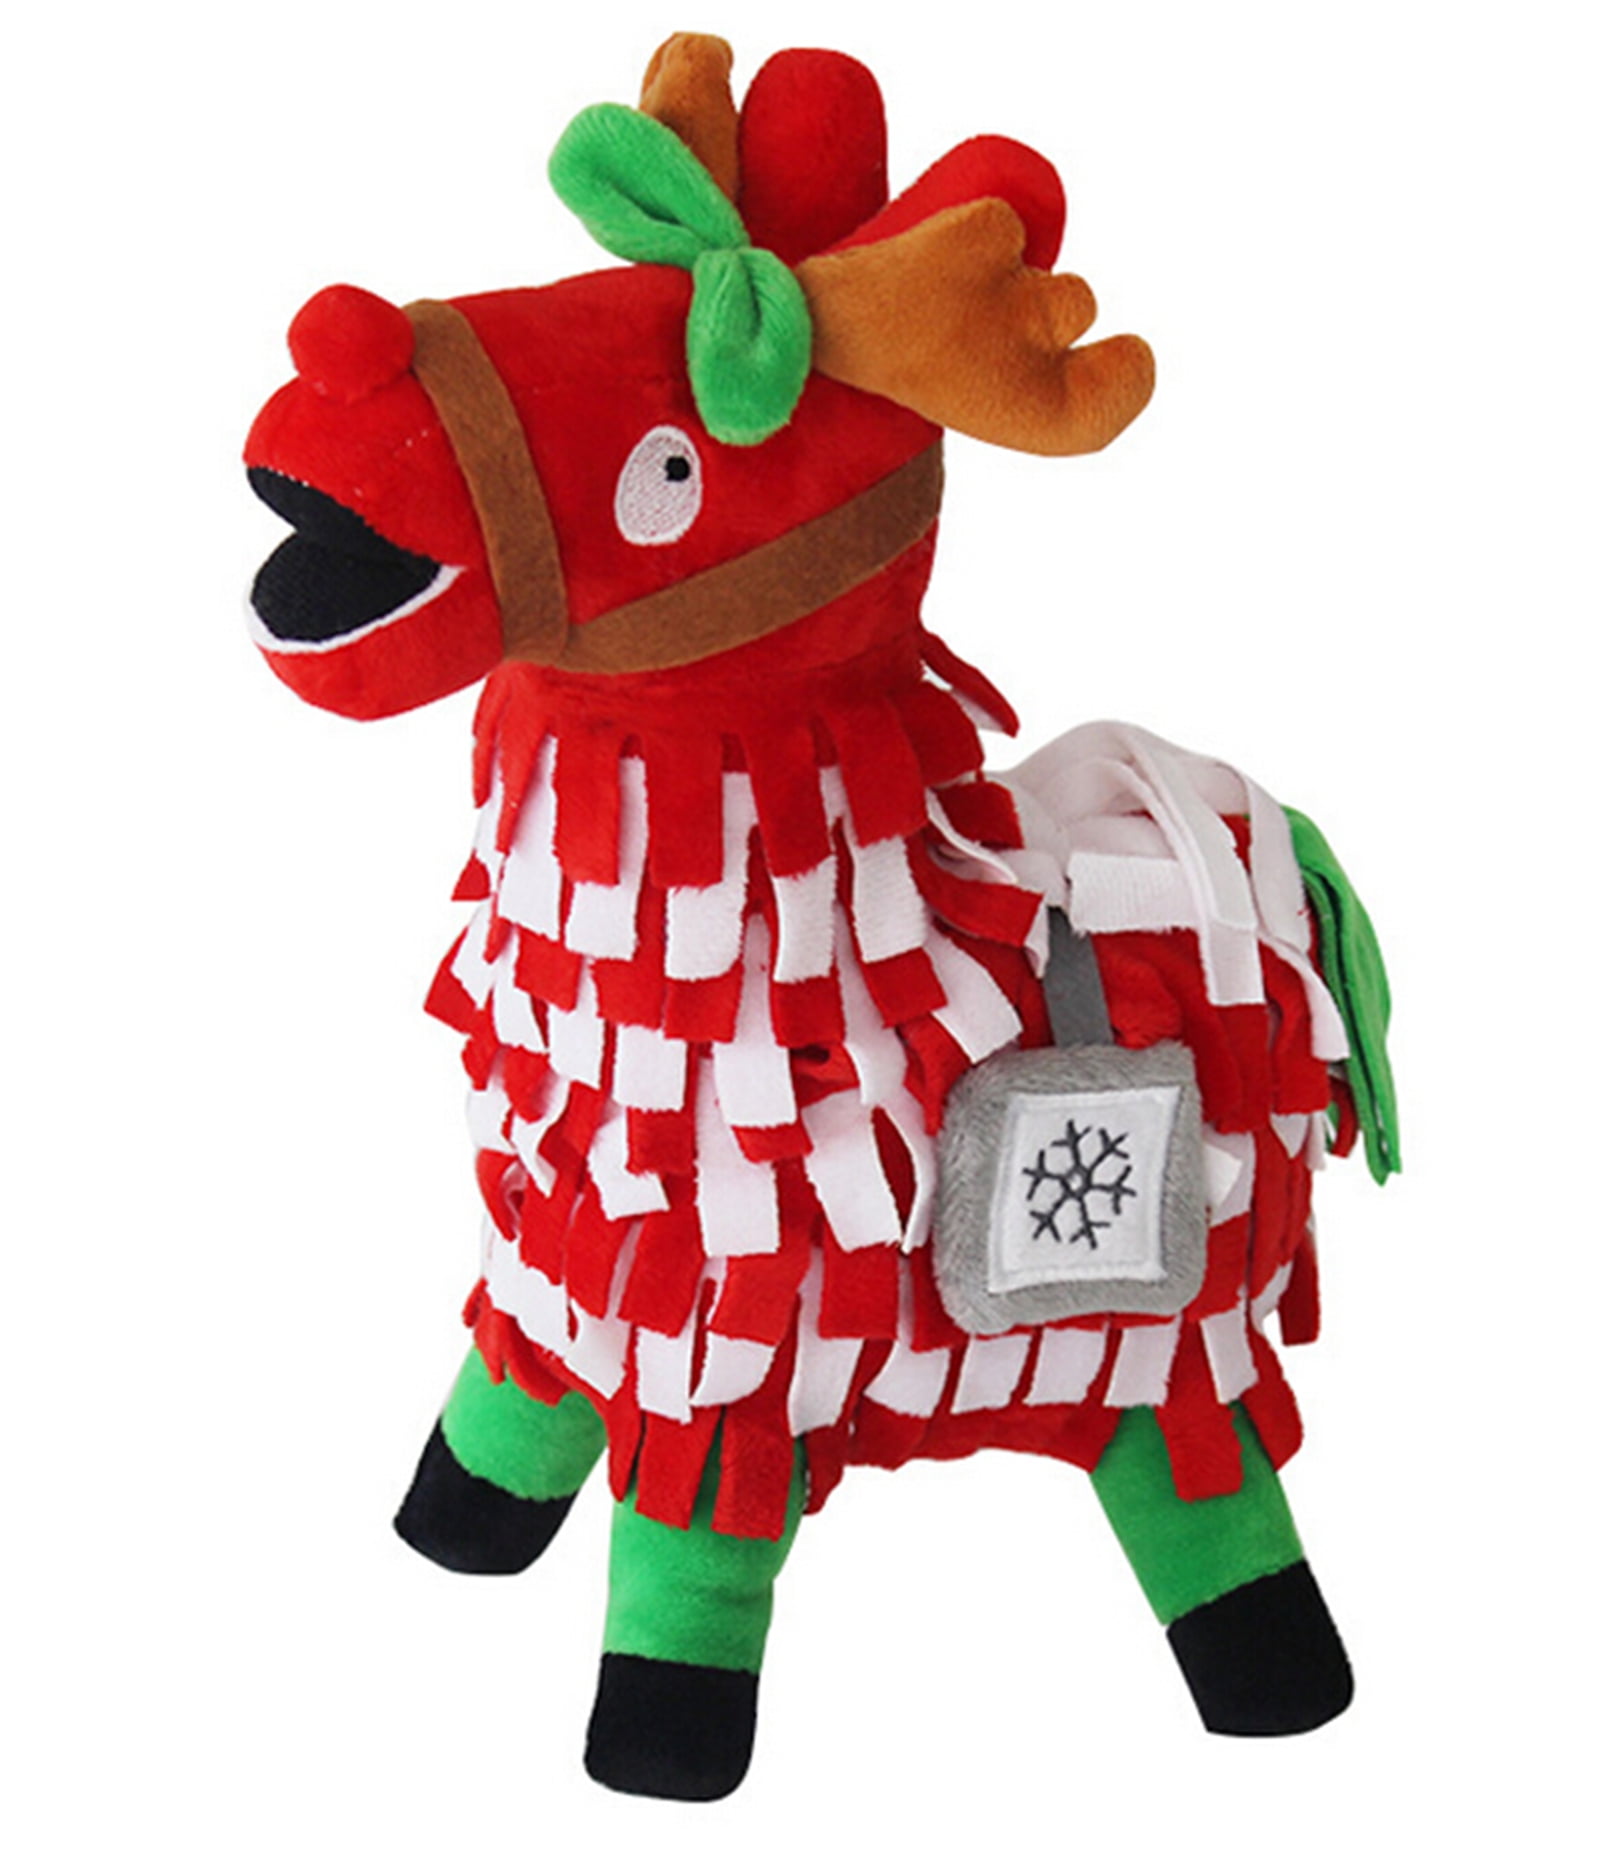 Fortnite Lama Plush Toy Cuddly Stuffed Animal Doll Game Figure Soft Toys Gift DE 